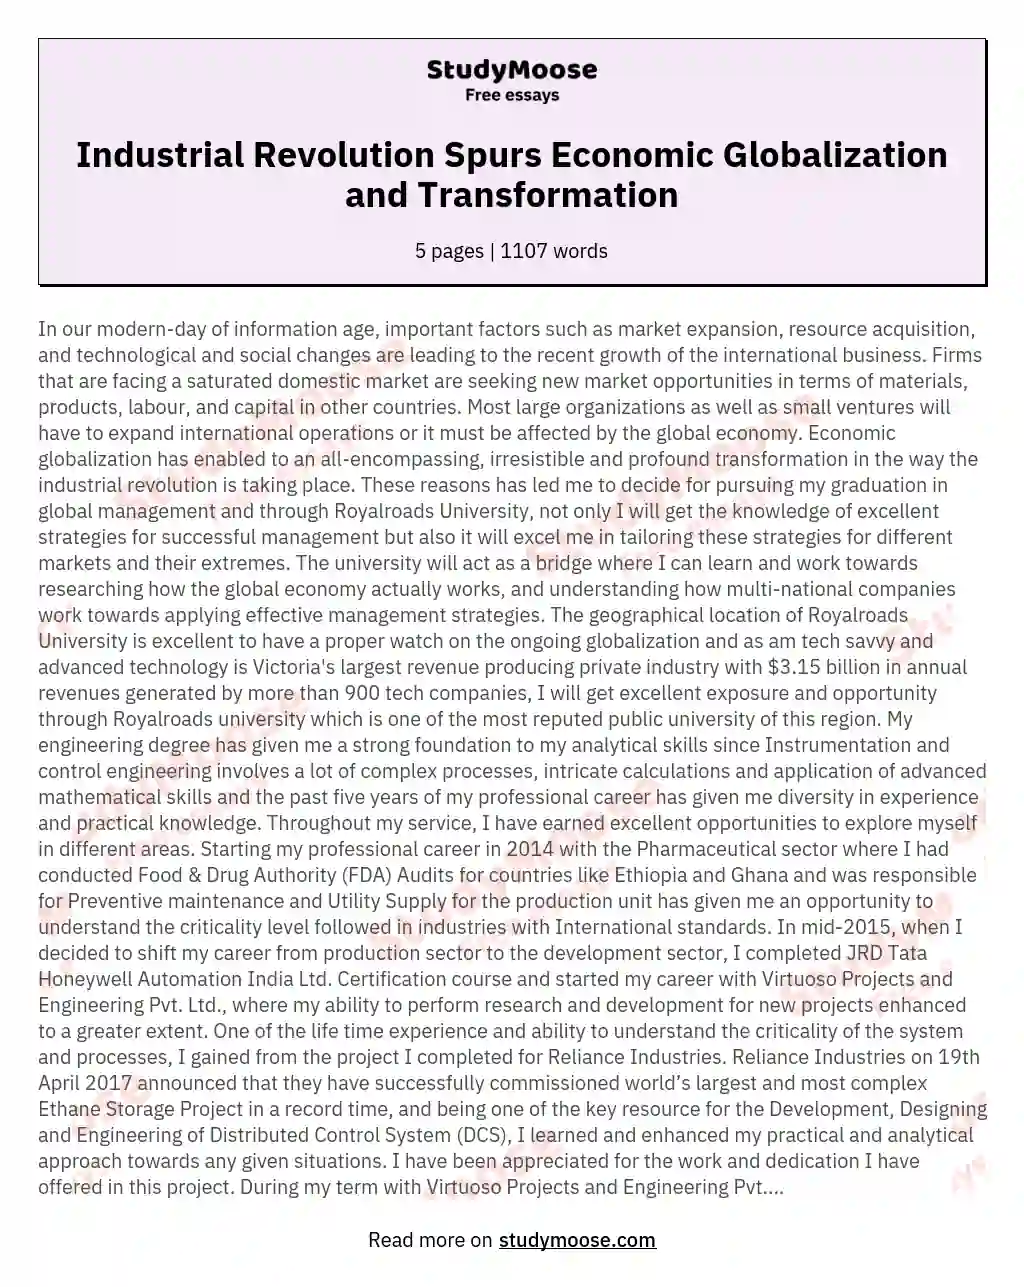 Industrial Revolution Spurs Economic Globalization and Transformation essay